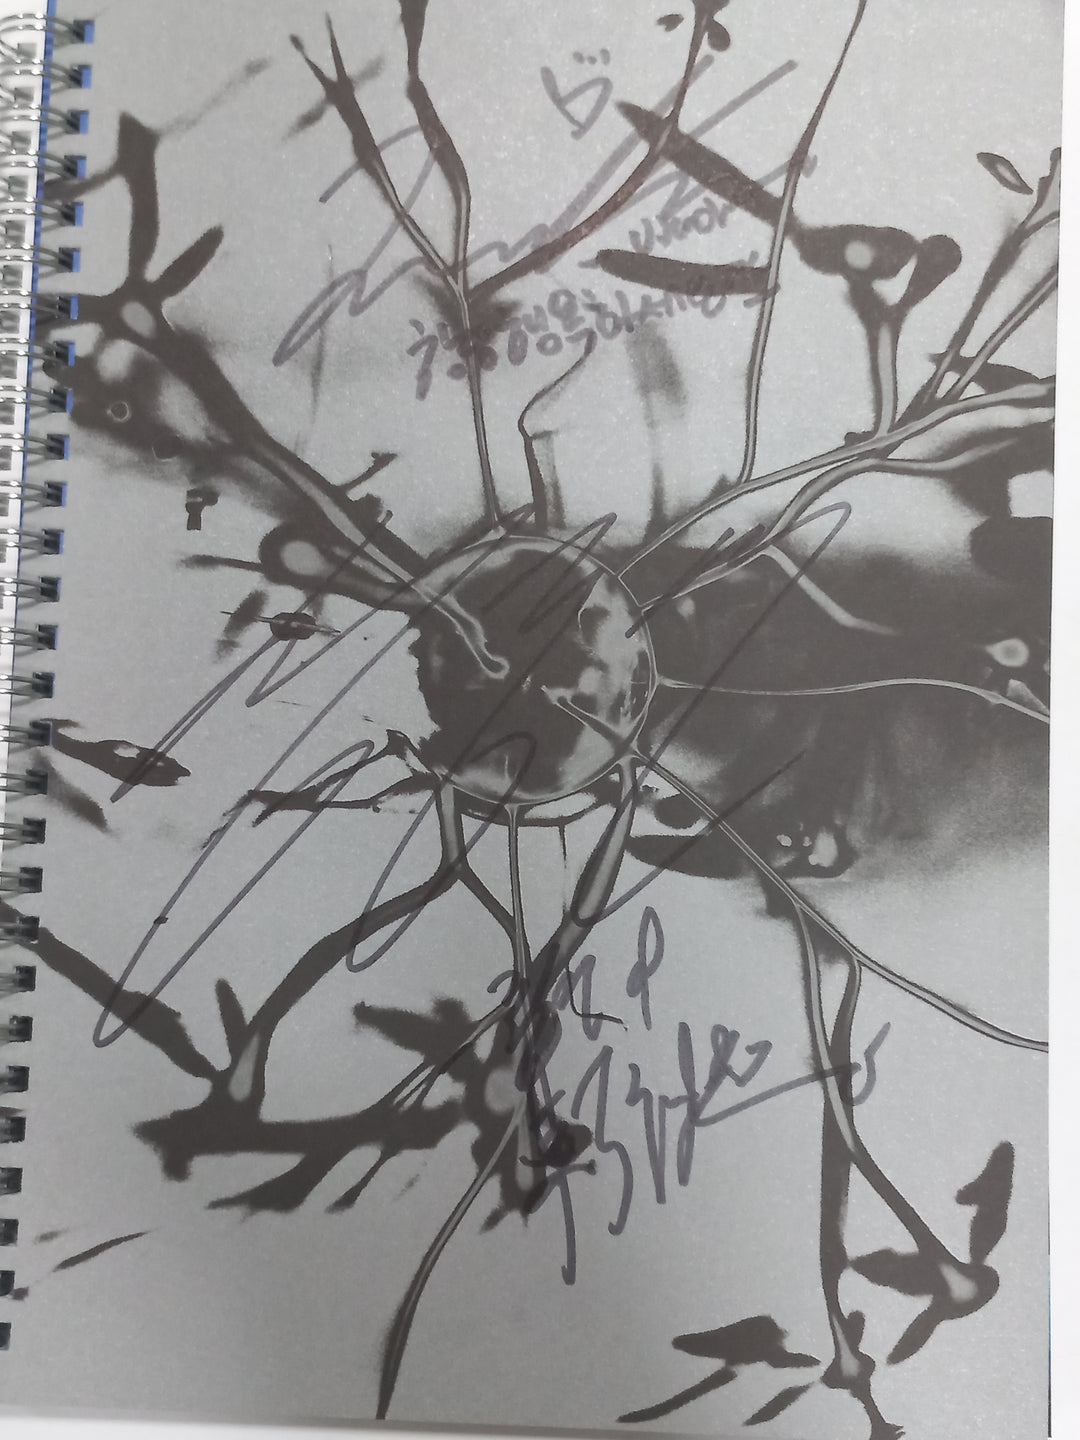 TVXQ! "20&2" - Hand Autographed(Signed) Promo Album [24.1.18] (Restocked 1/19)